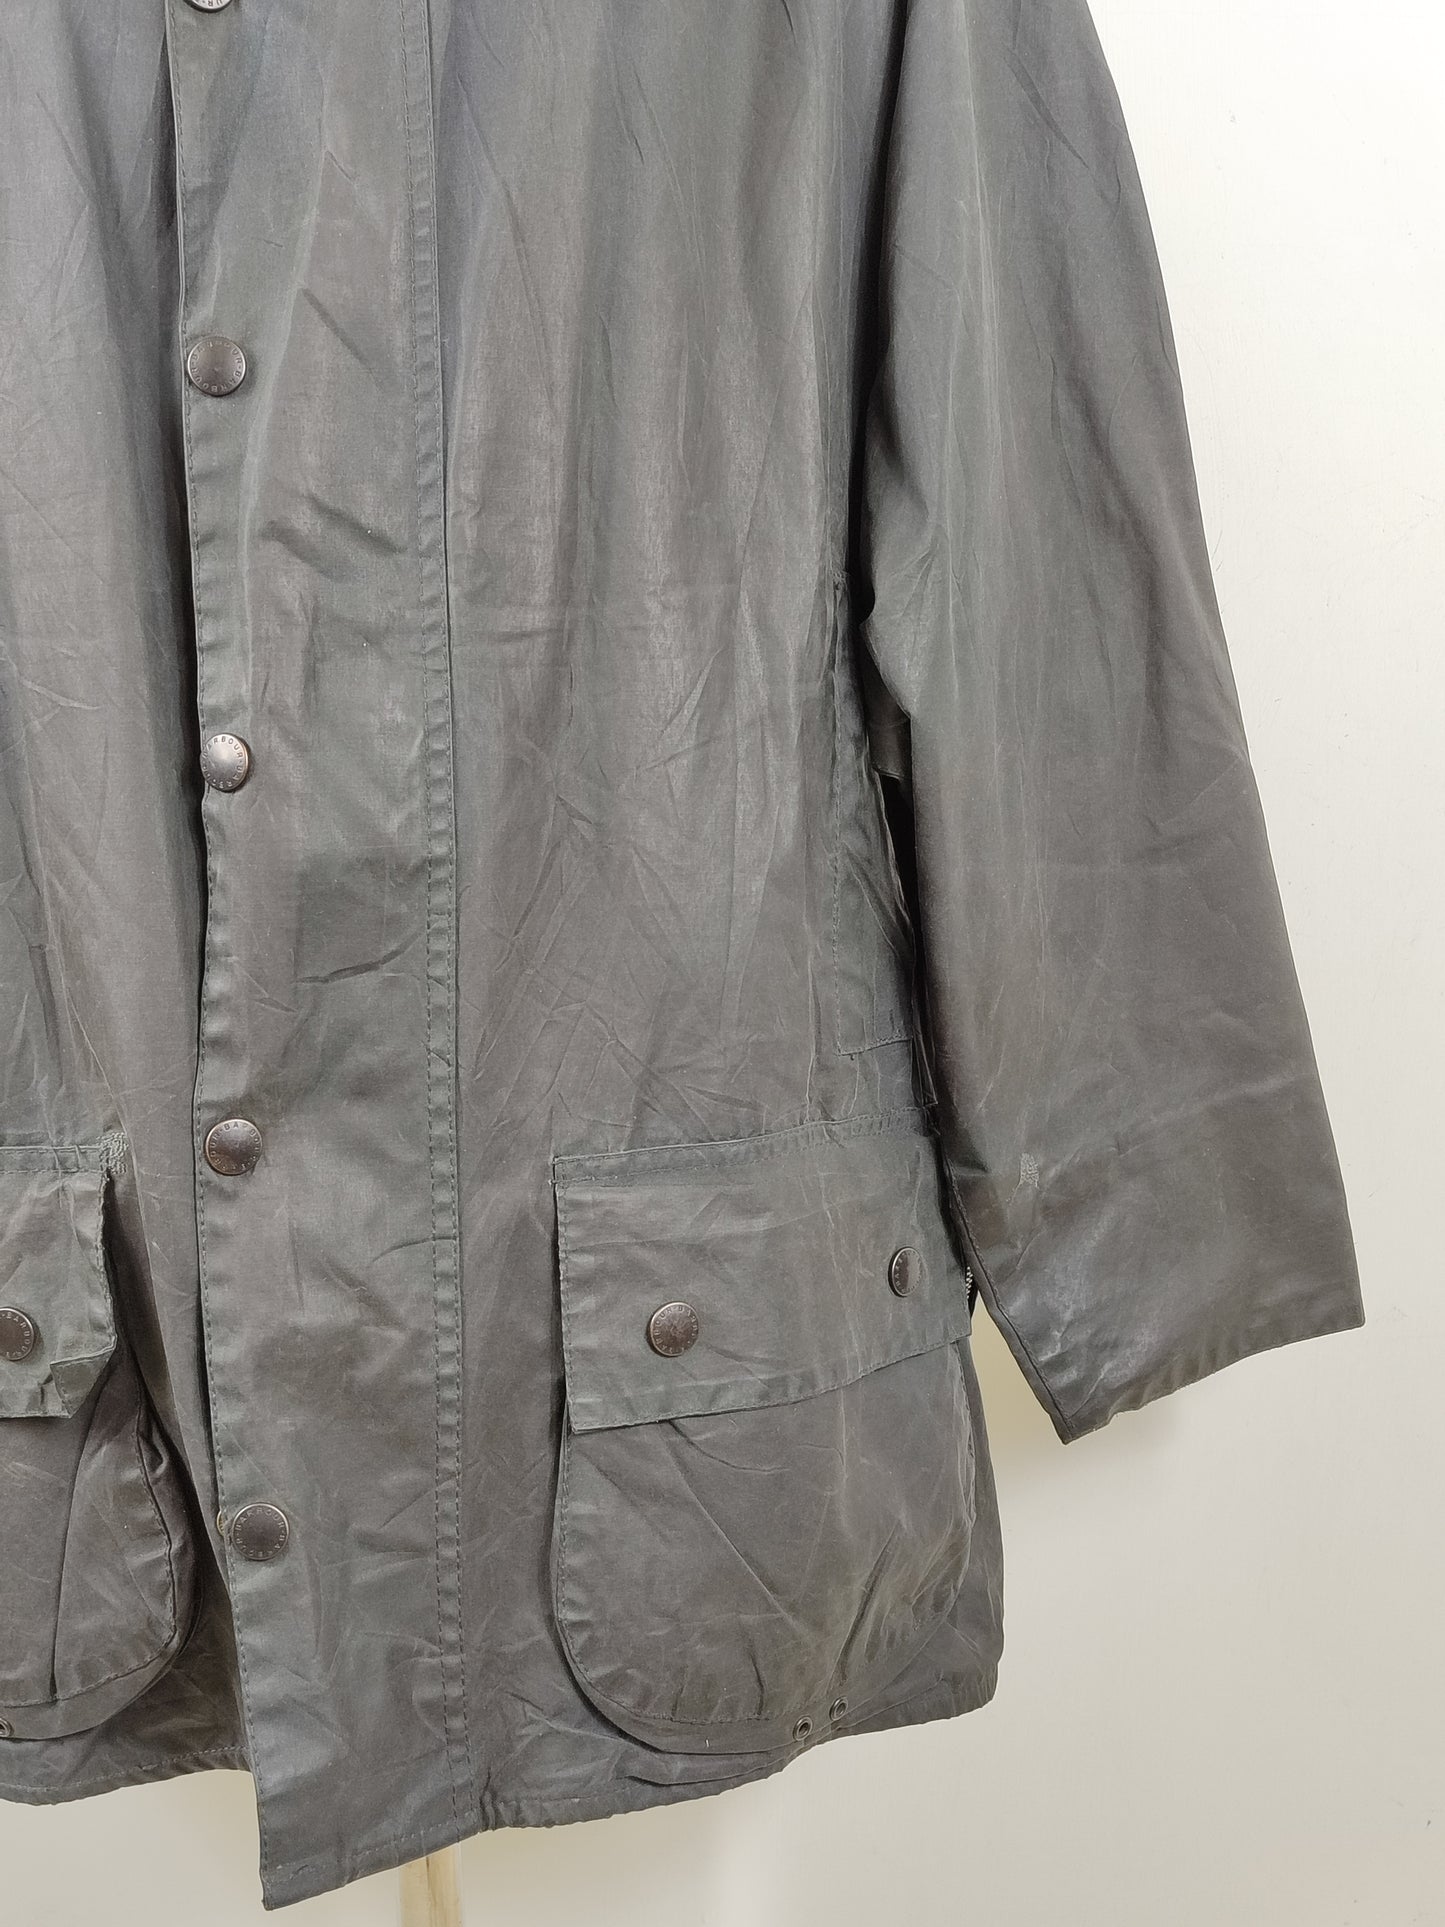 Barbour Giacca Beaufort vintage blu C48/122cm - Navy Beaufort Waxed jacket c48 size XL